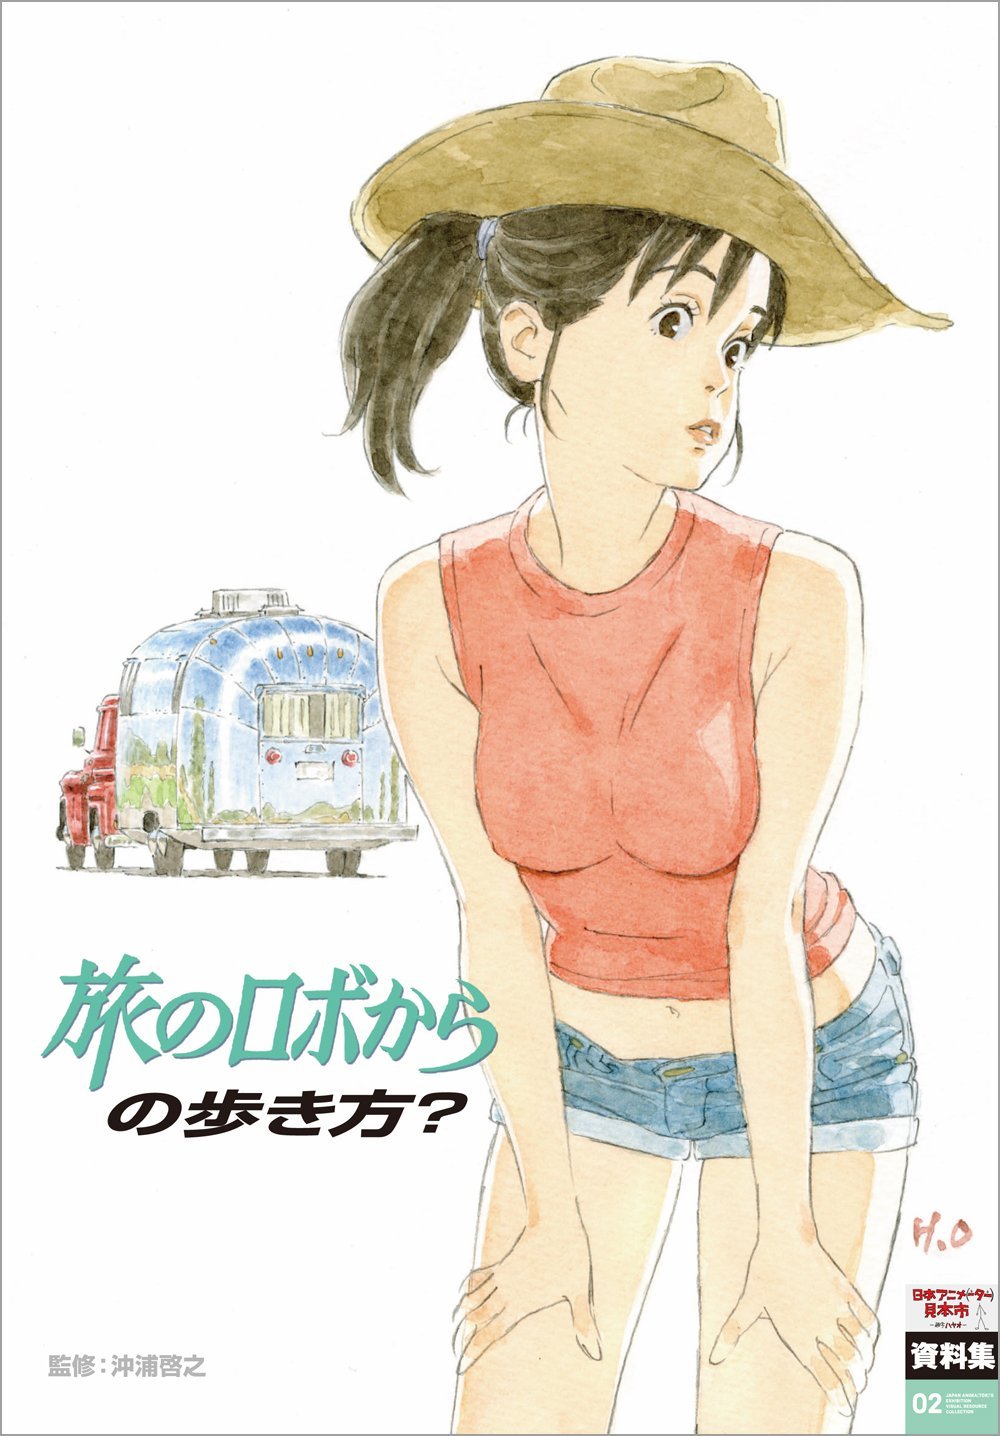 Catsuka Shopping - Japan Animator Expo Vol. 2 Robot on The Road Art Book